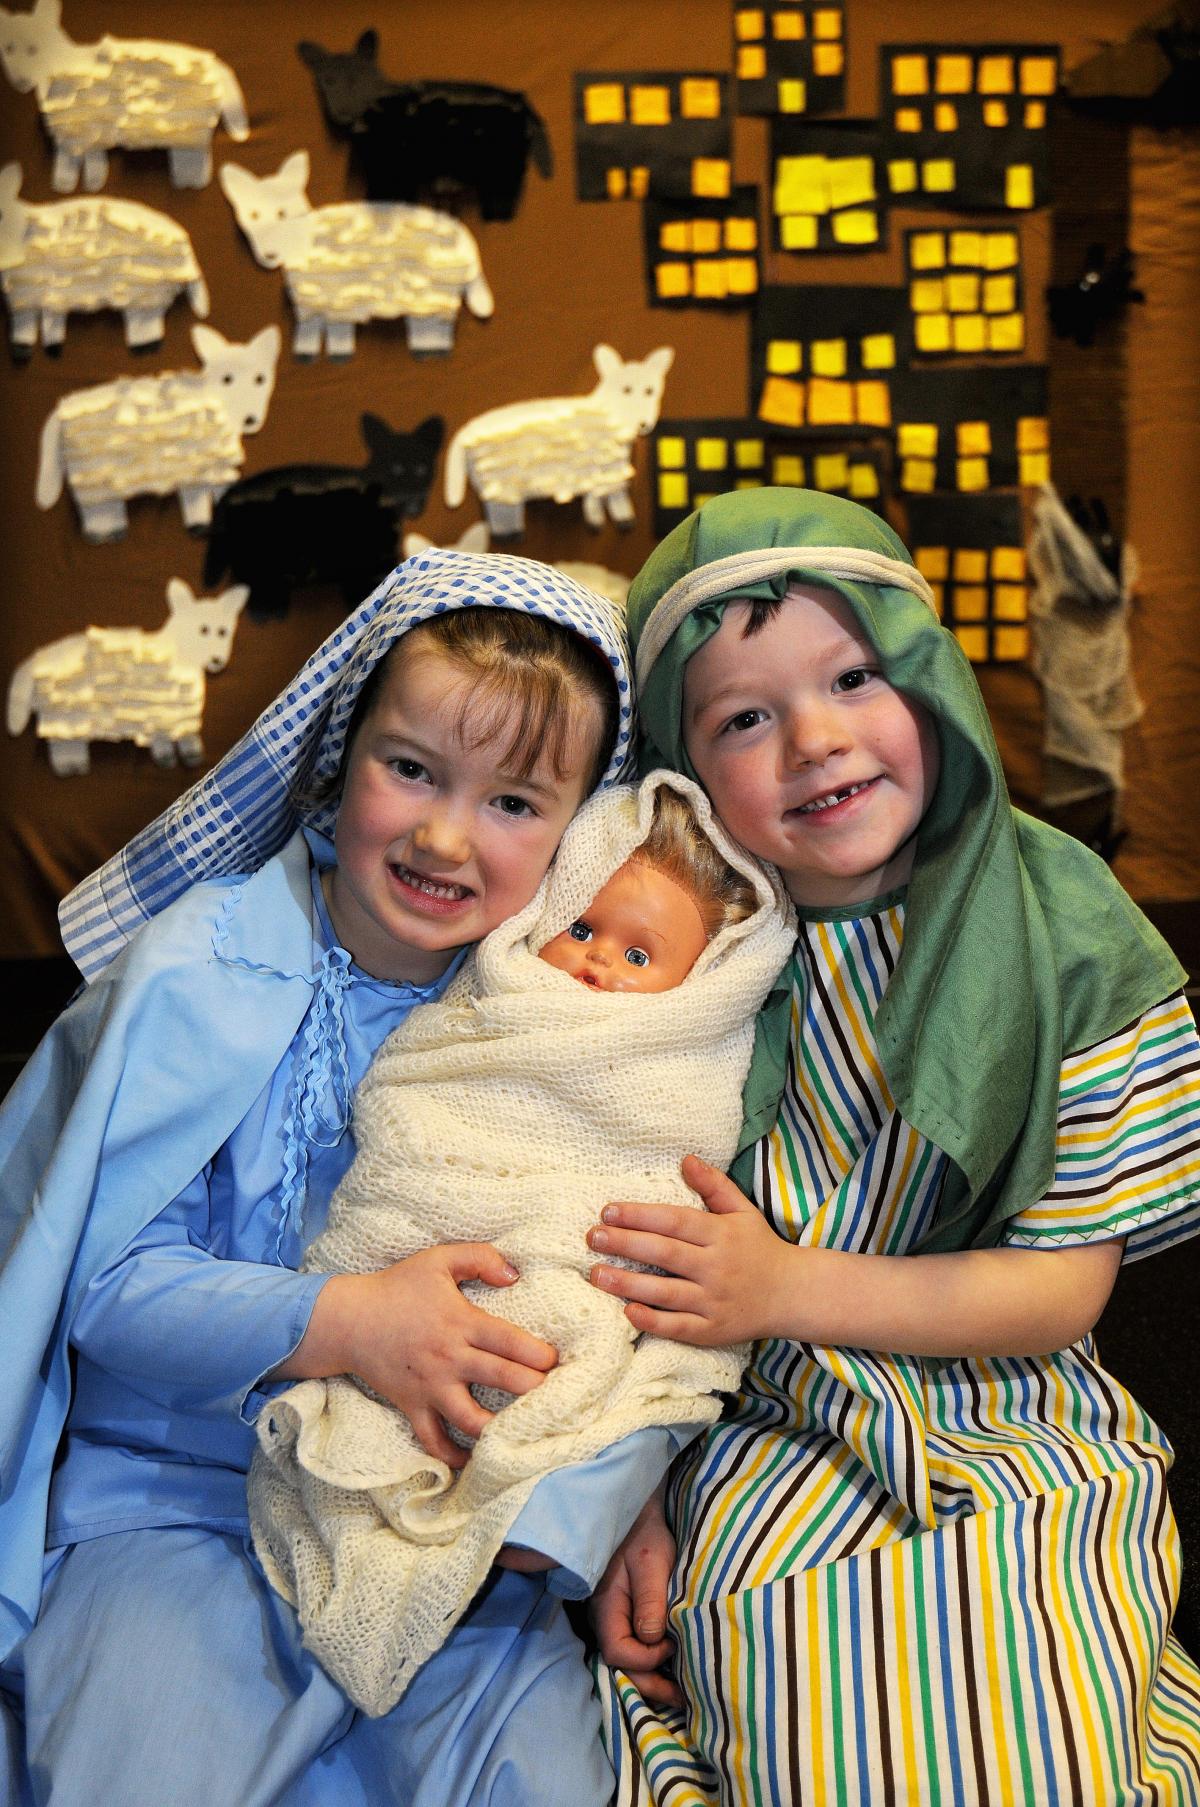 Appearing in Ben Rhydding Primary School Nativity were Megan Fawcett-Bruce and Matthew Briggs